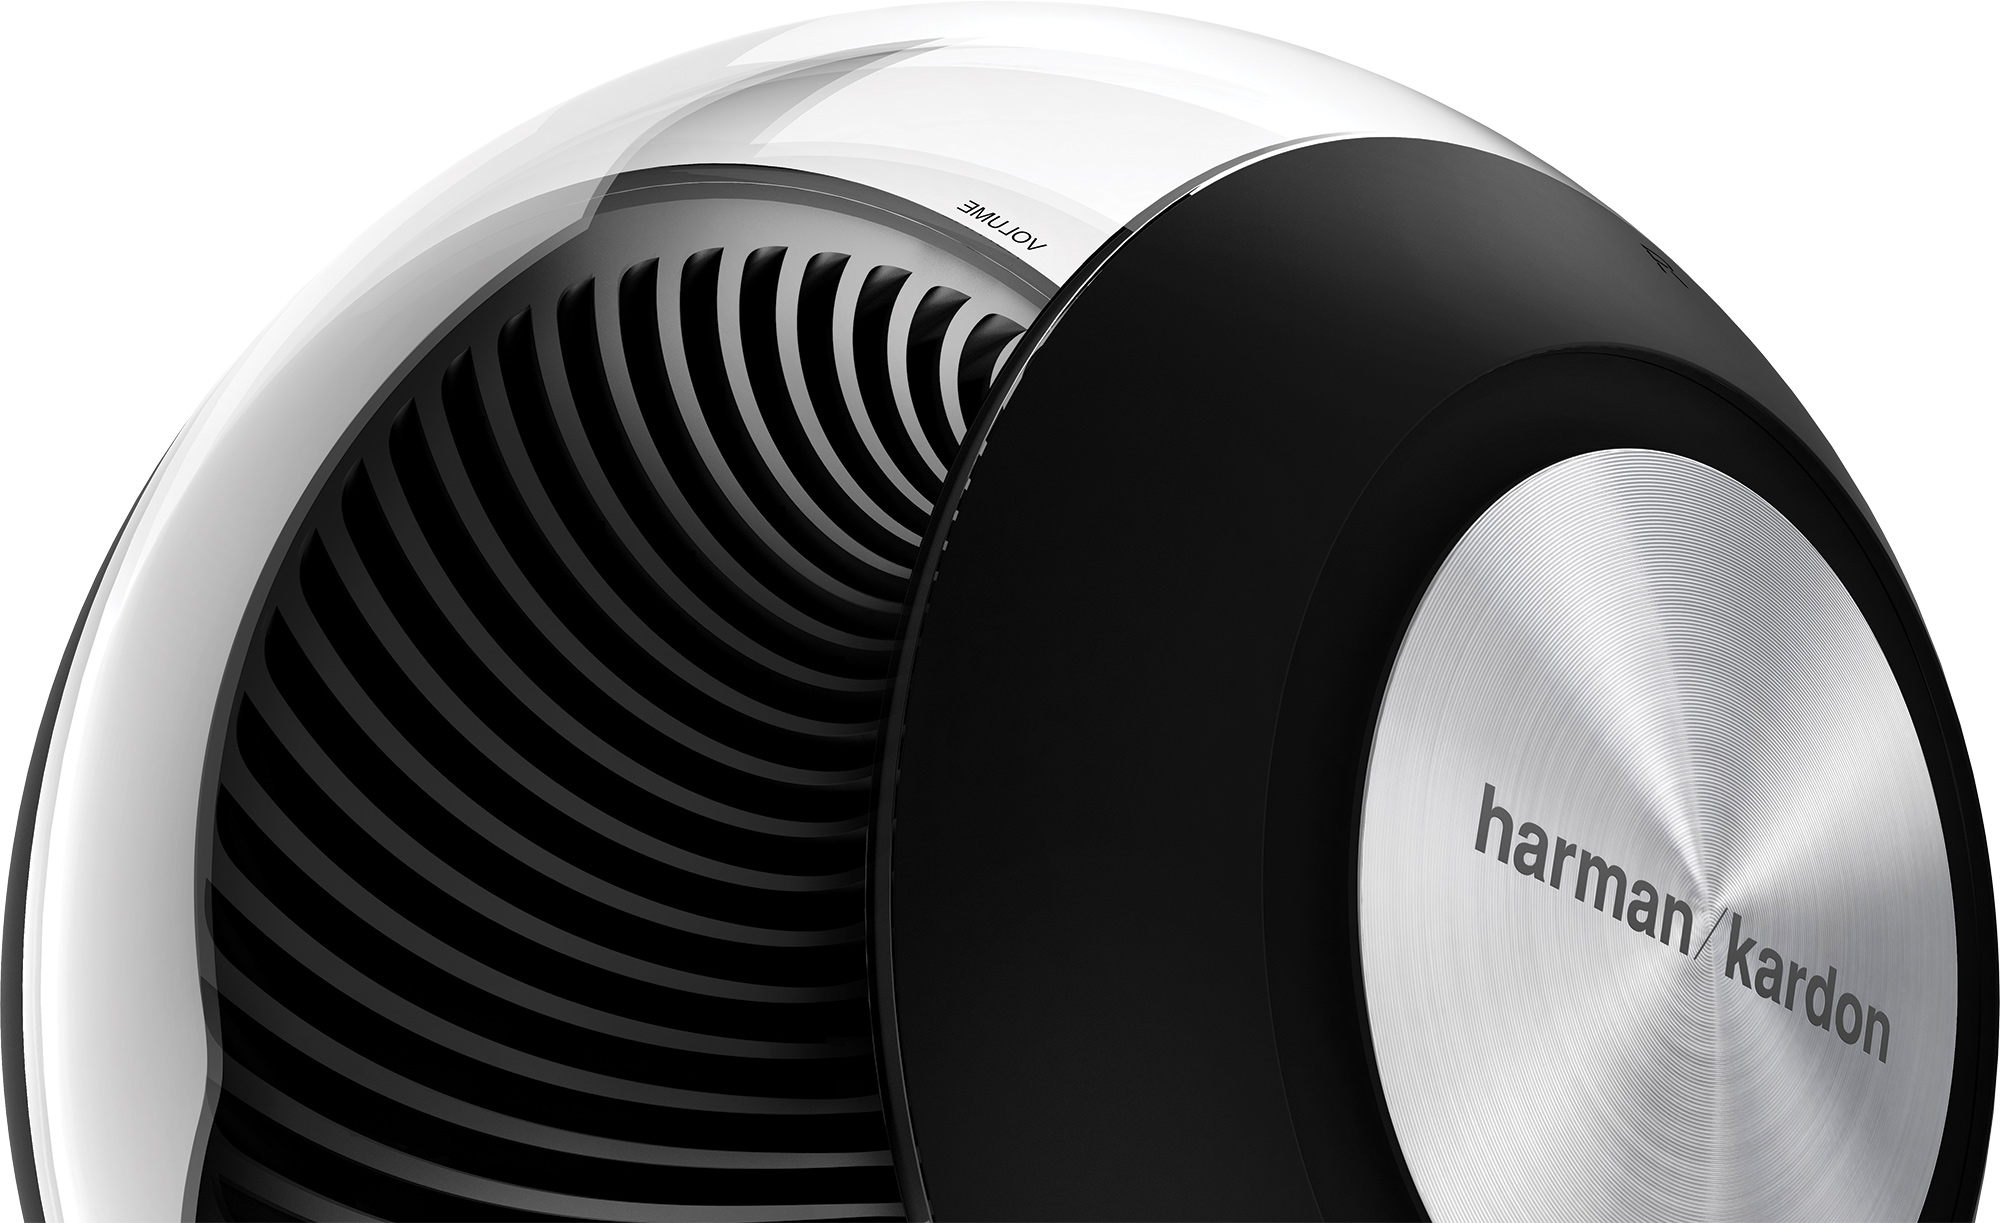 Cortana to be in Harman Kardon speakers soon